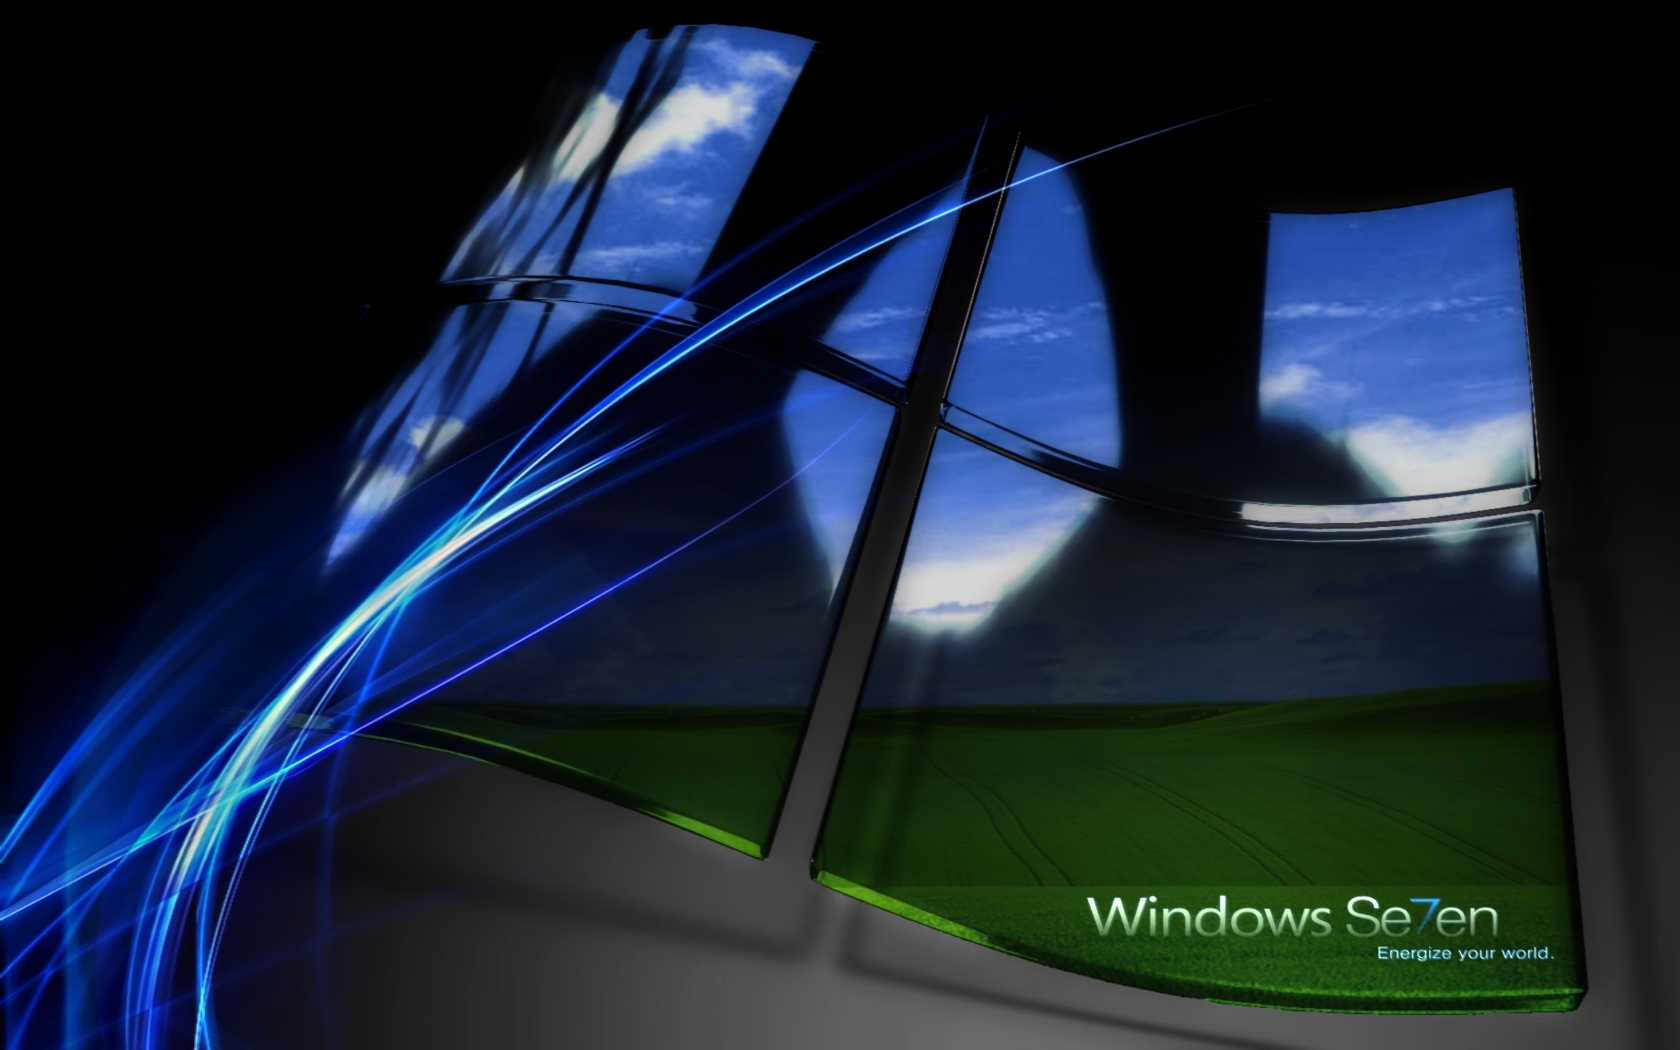 Windows Energize Your World HD Wallpaper10